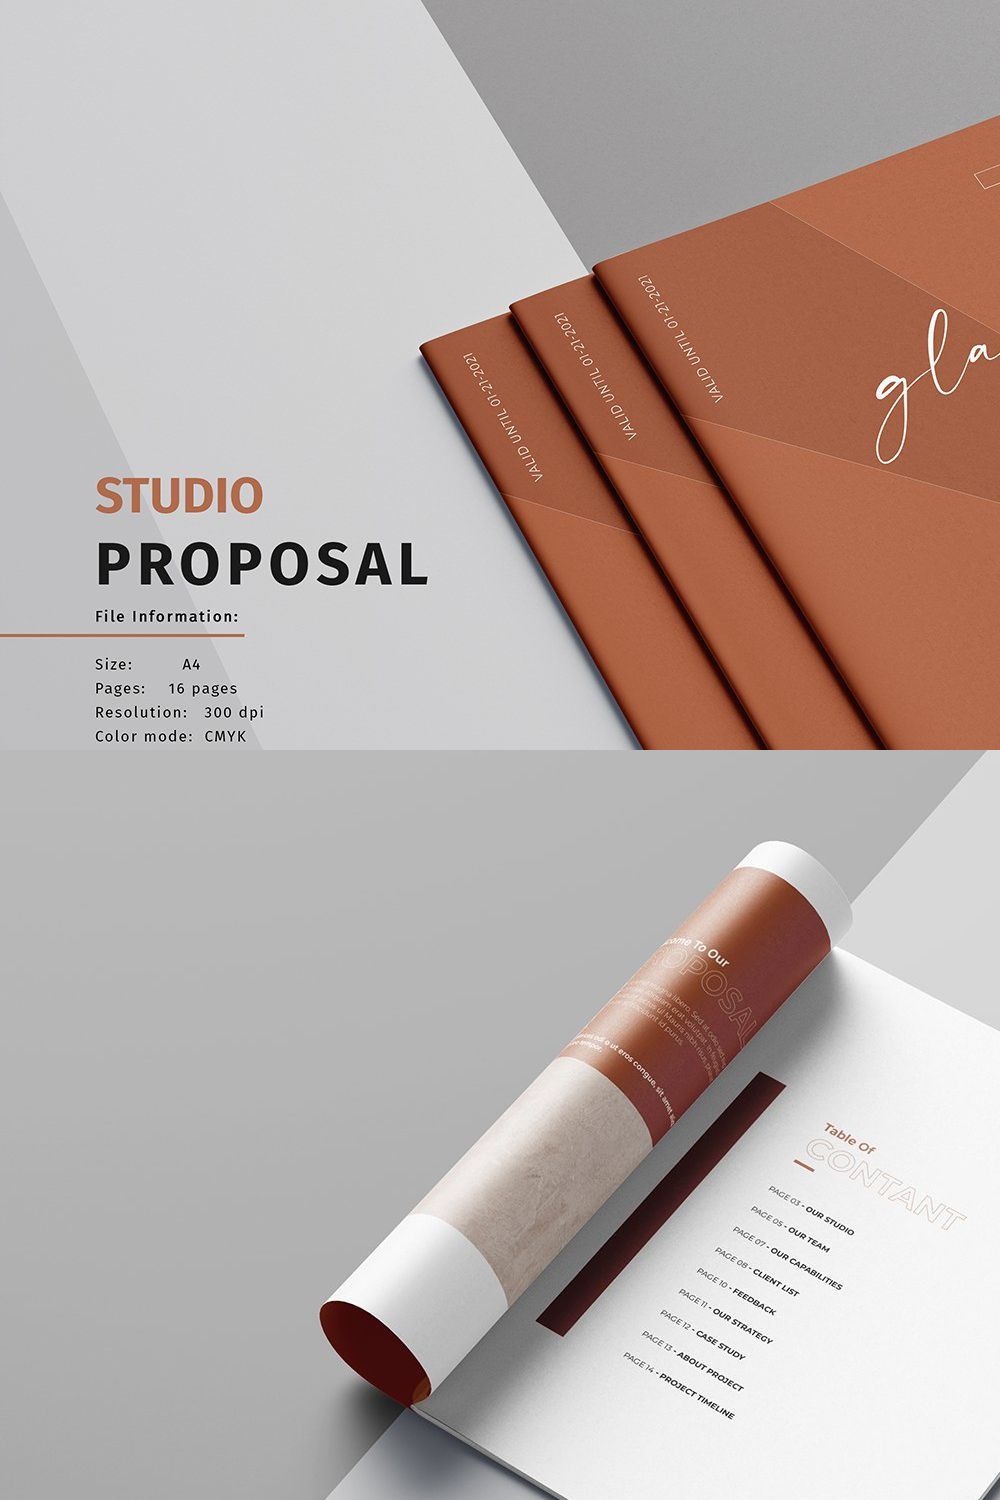 Studio Proposal Templates pinterest preview image.